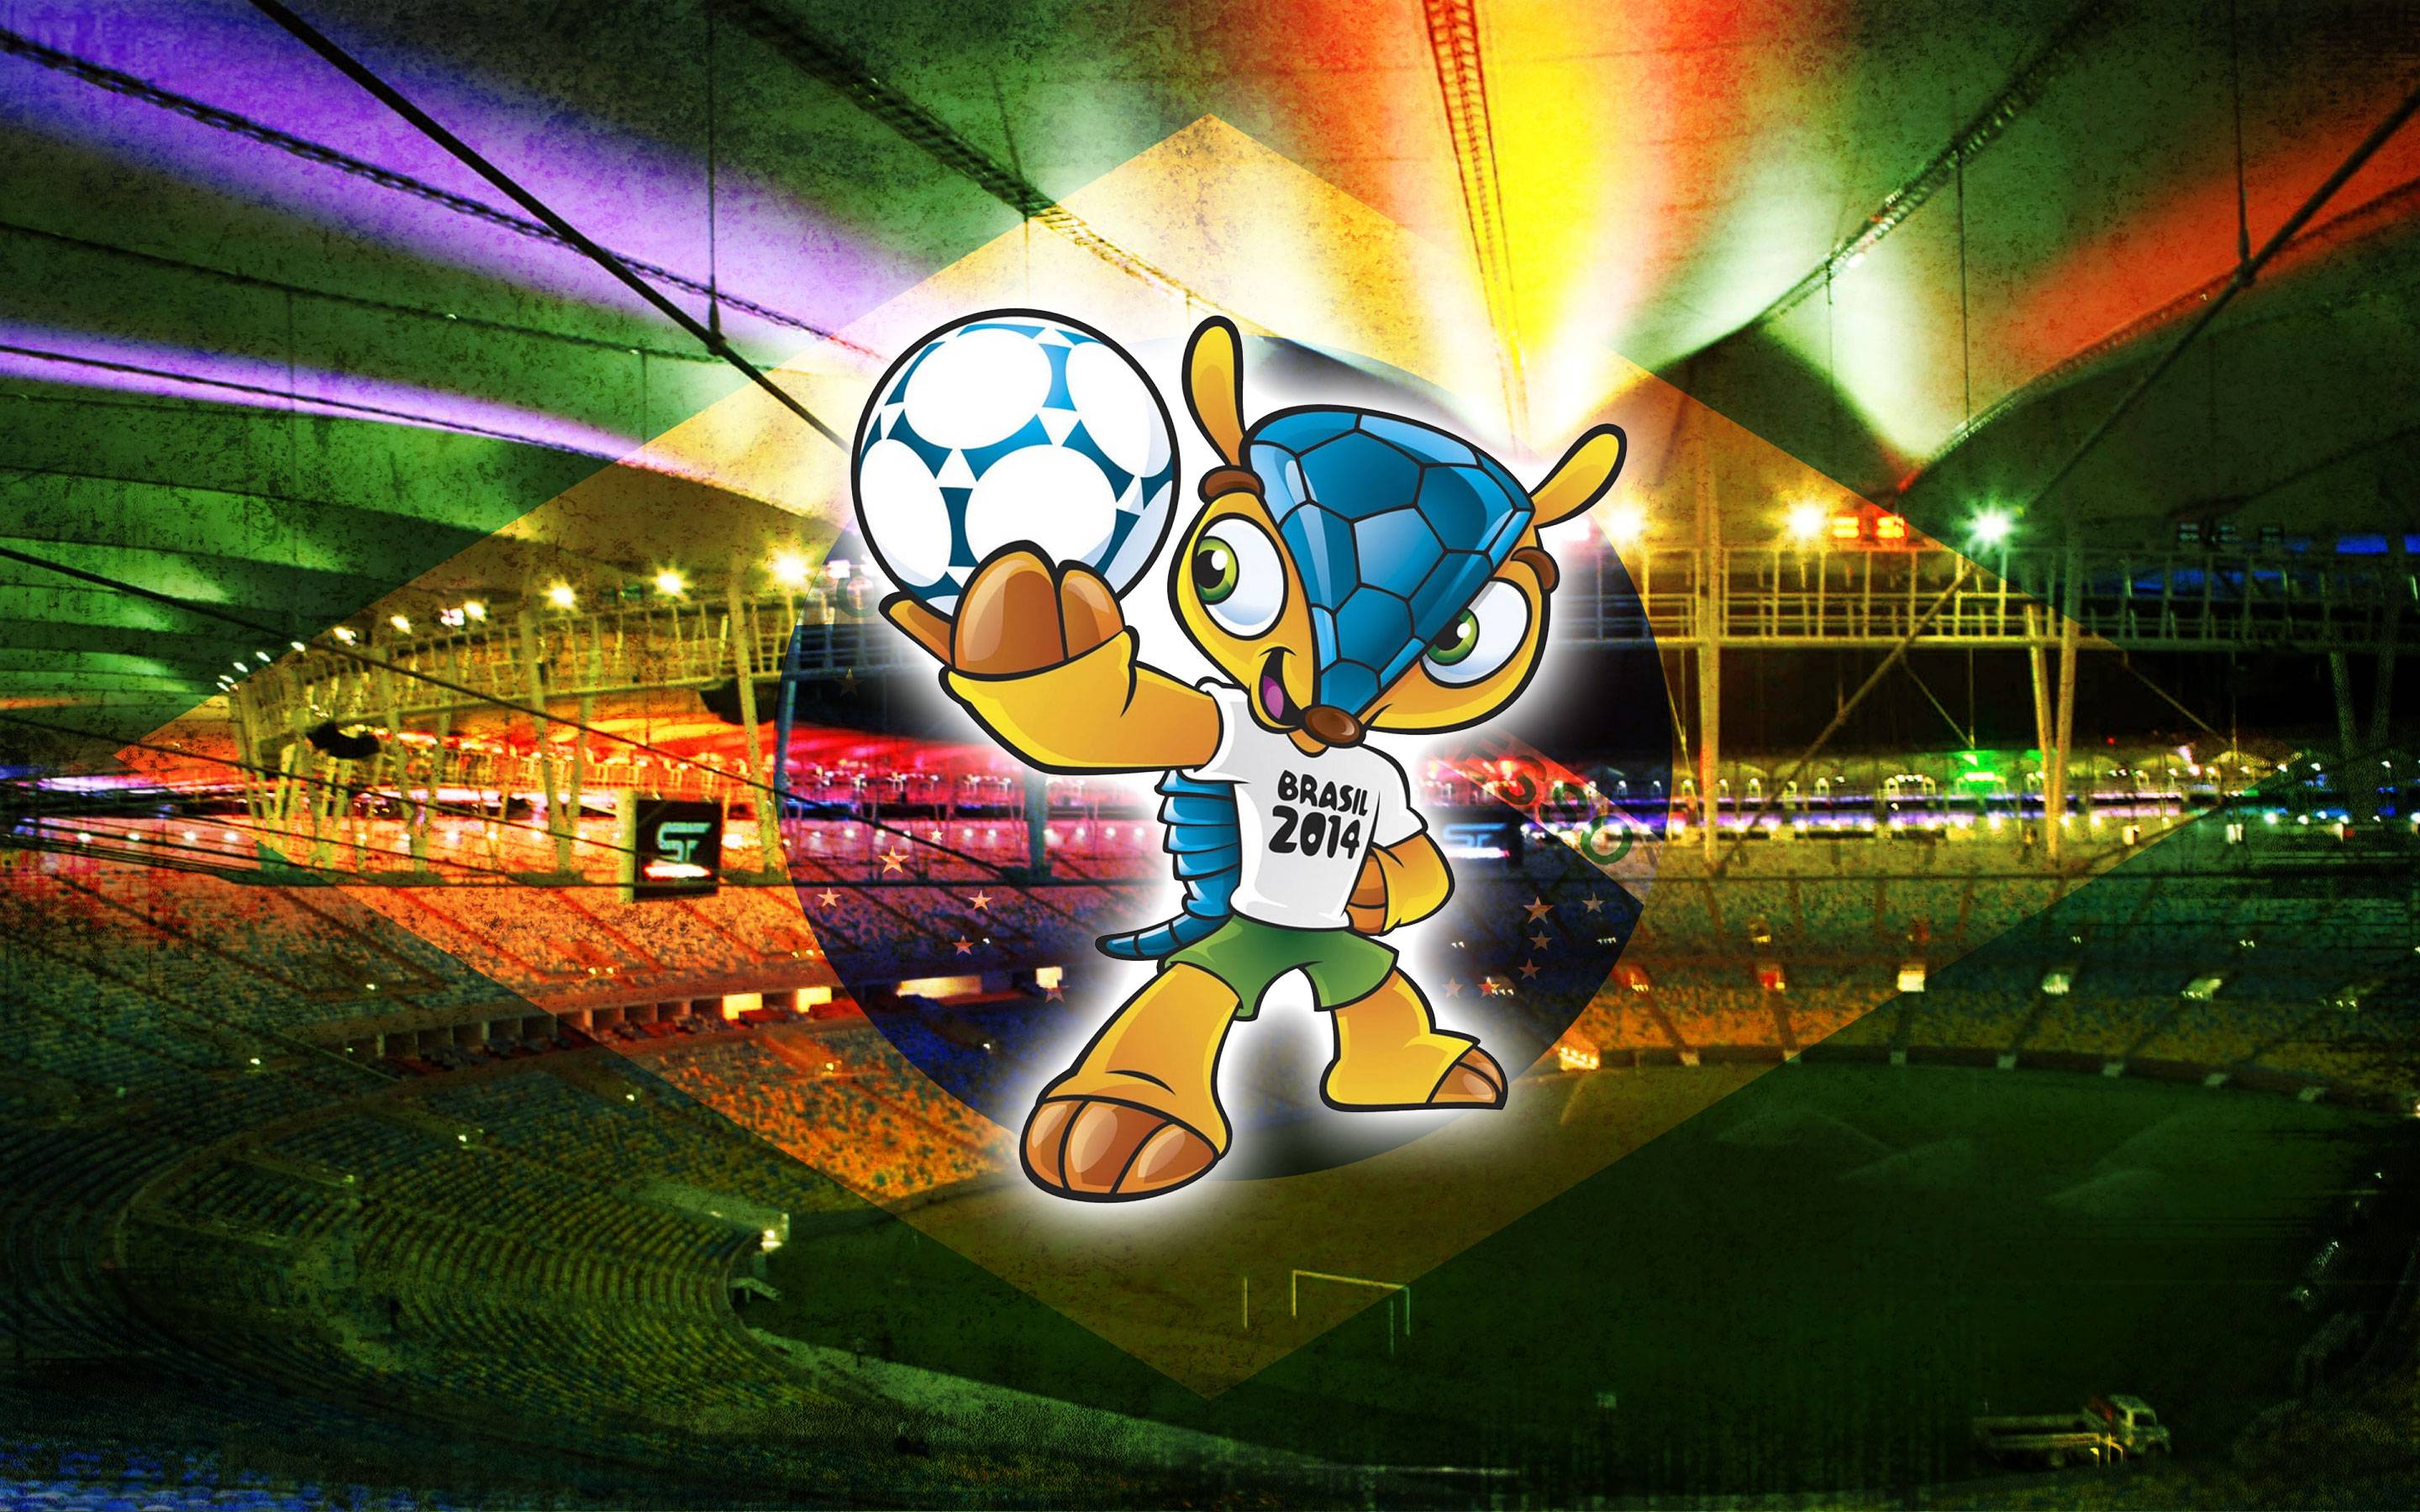 Fuleco The Armadillo 2014 World Cup Mascot Wallpaper Wide or HD